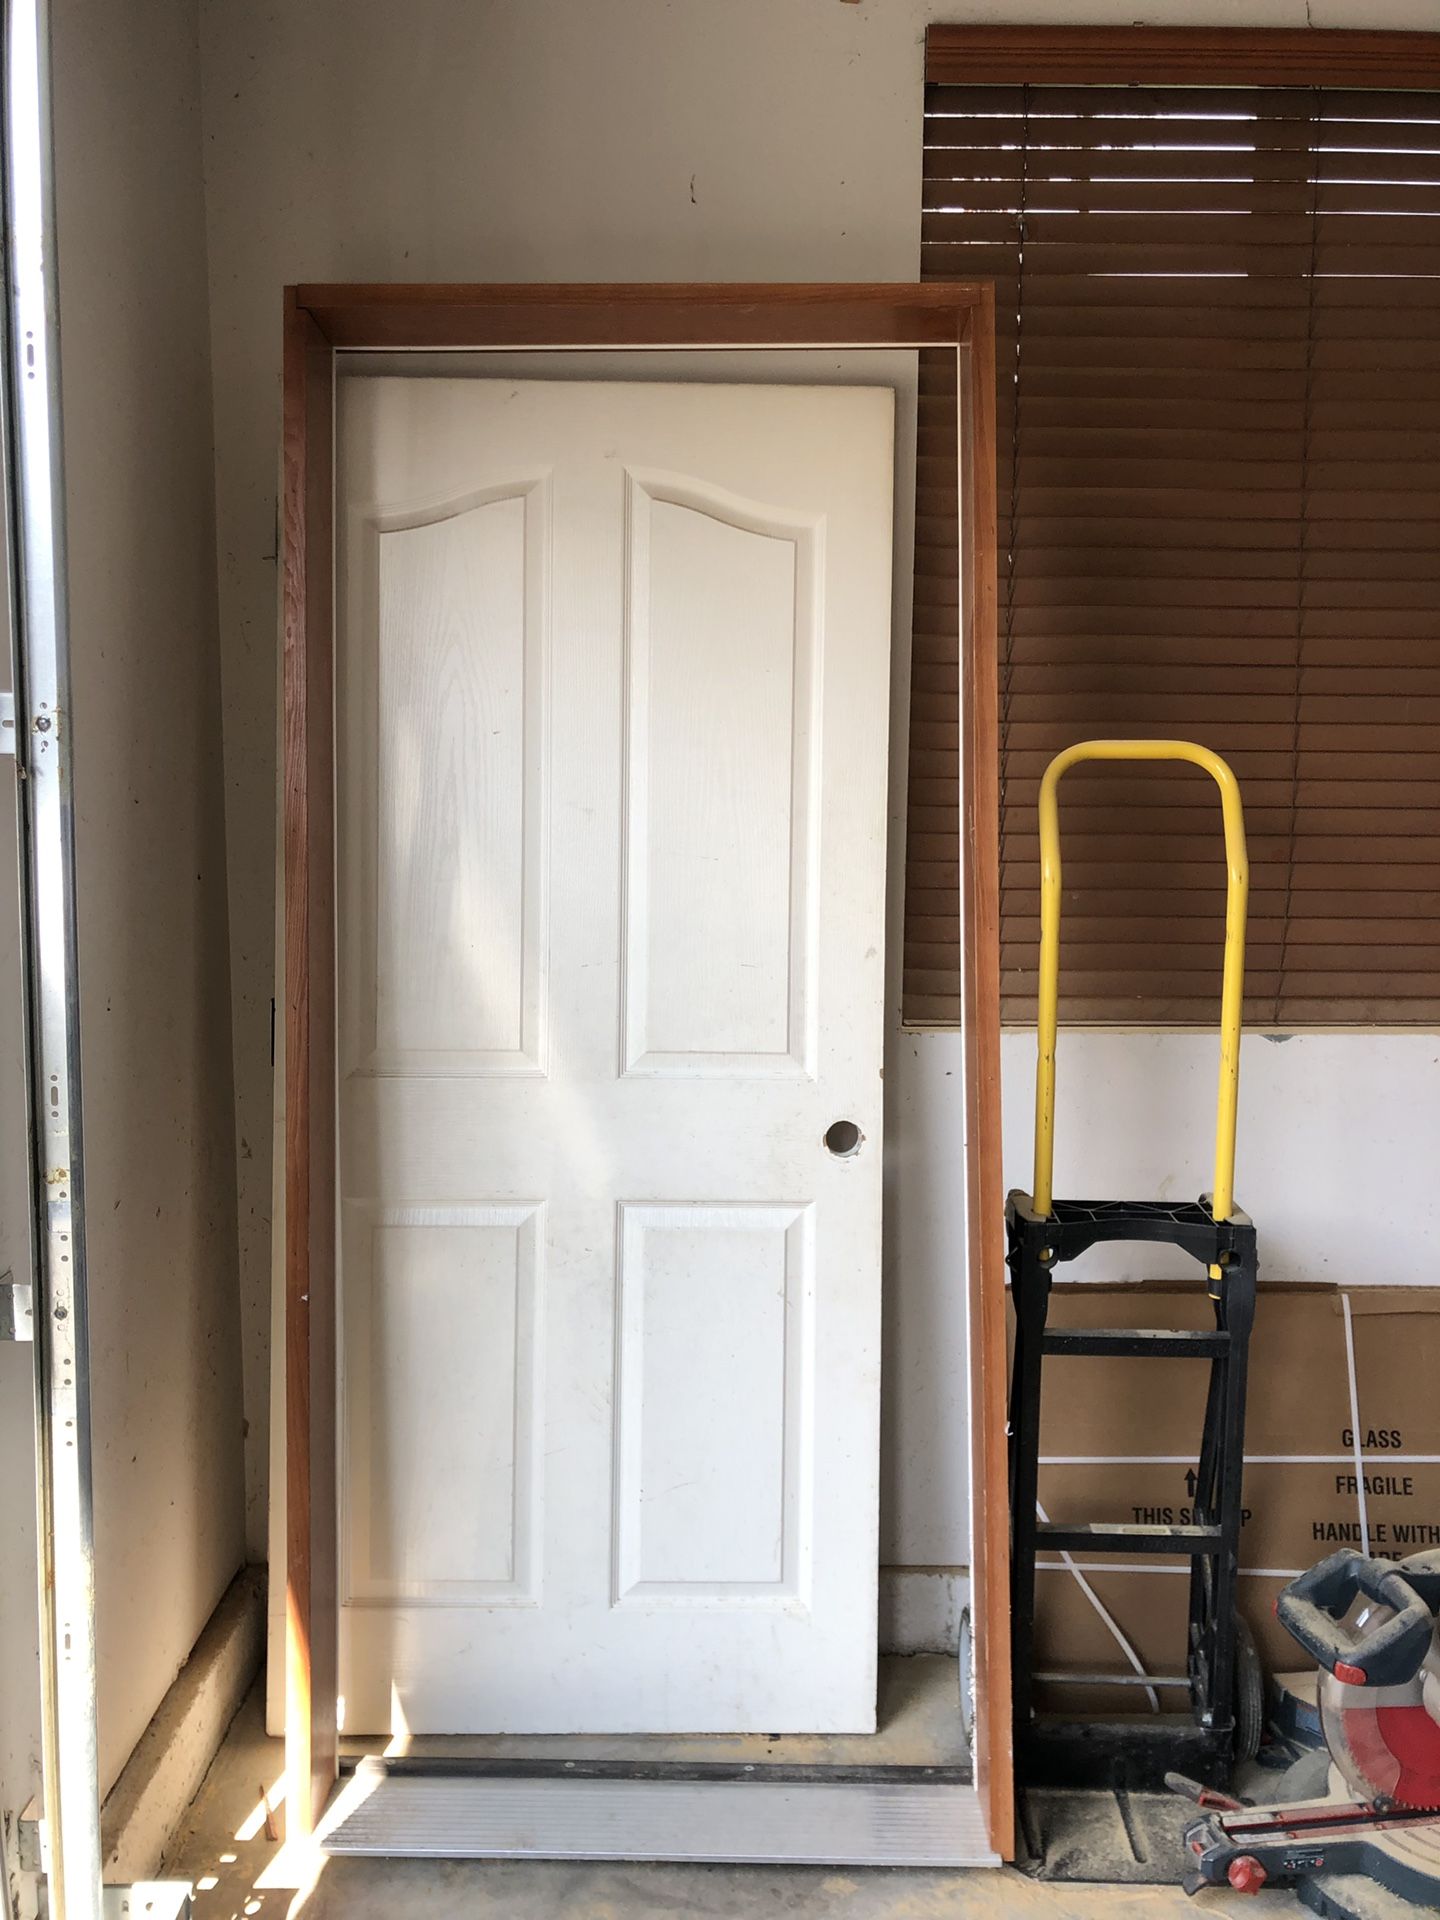 Garage entry door with frame